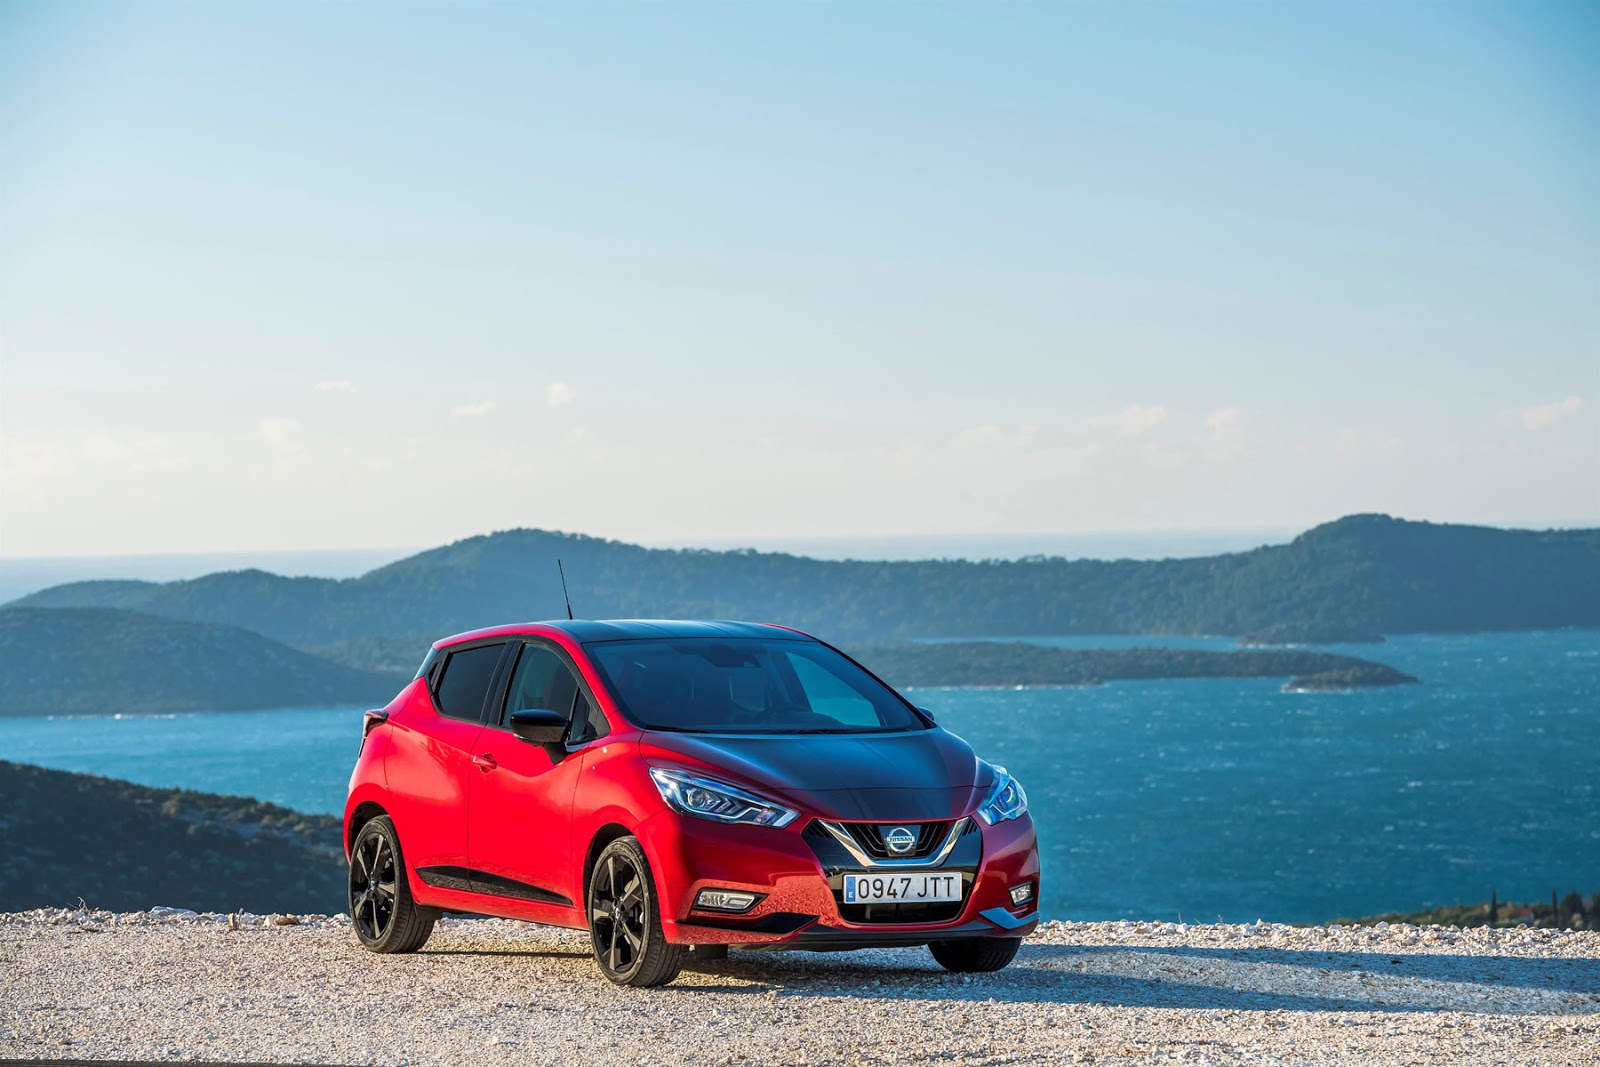 42New Nissan Micra Passion Red Toν Απρίλιο στην Ελλάδα, με τιμή από 12.090 ευρώ το νέο Micra